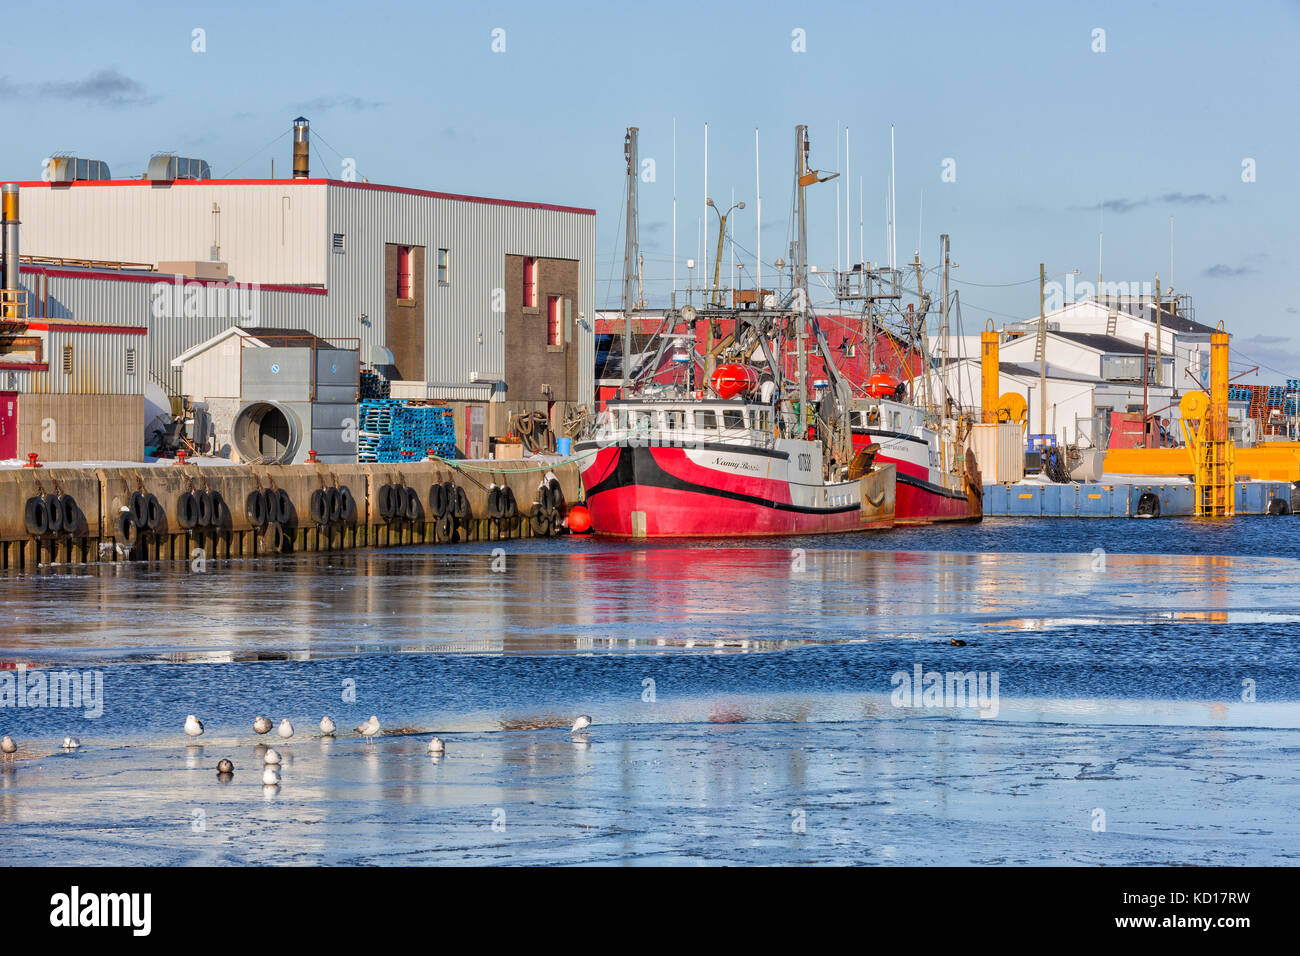 Fishing boats tied up at wharf in winter, Glace Bay, Nova Scotia, Canada Stock Photo